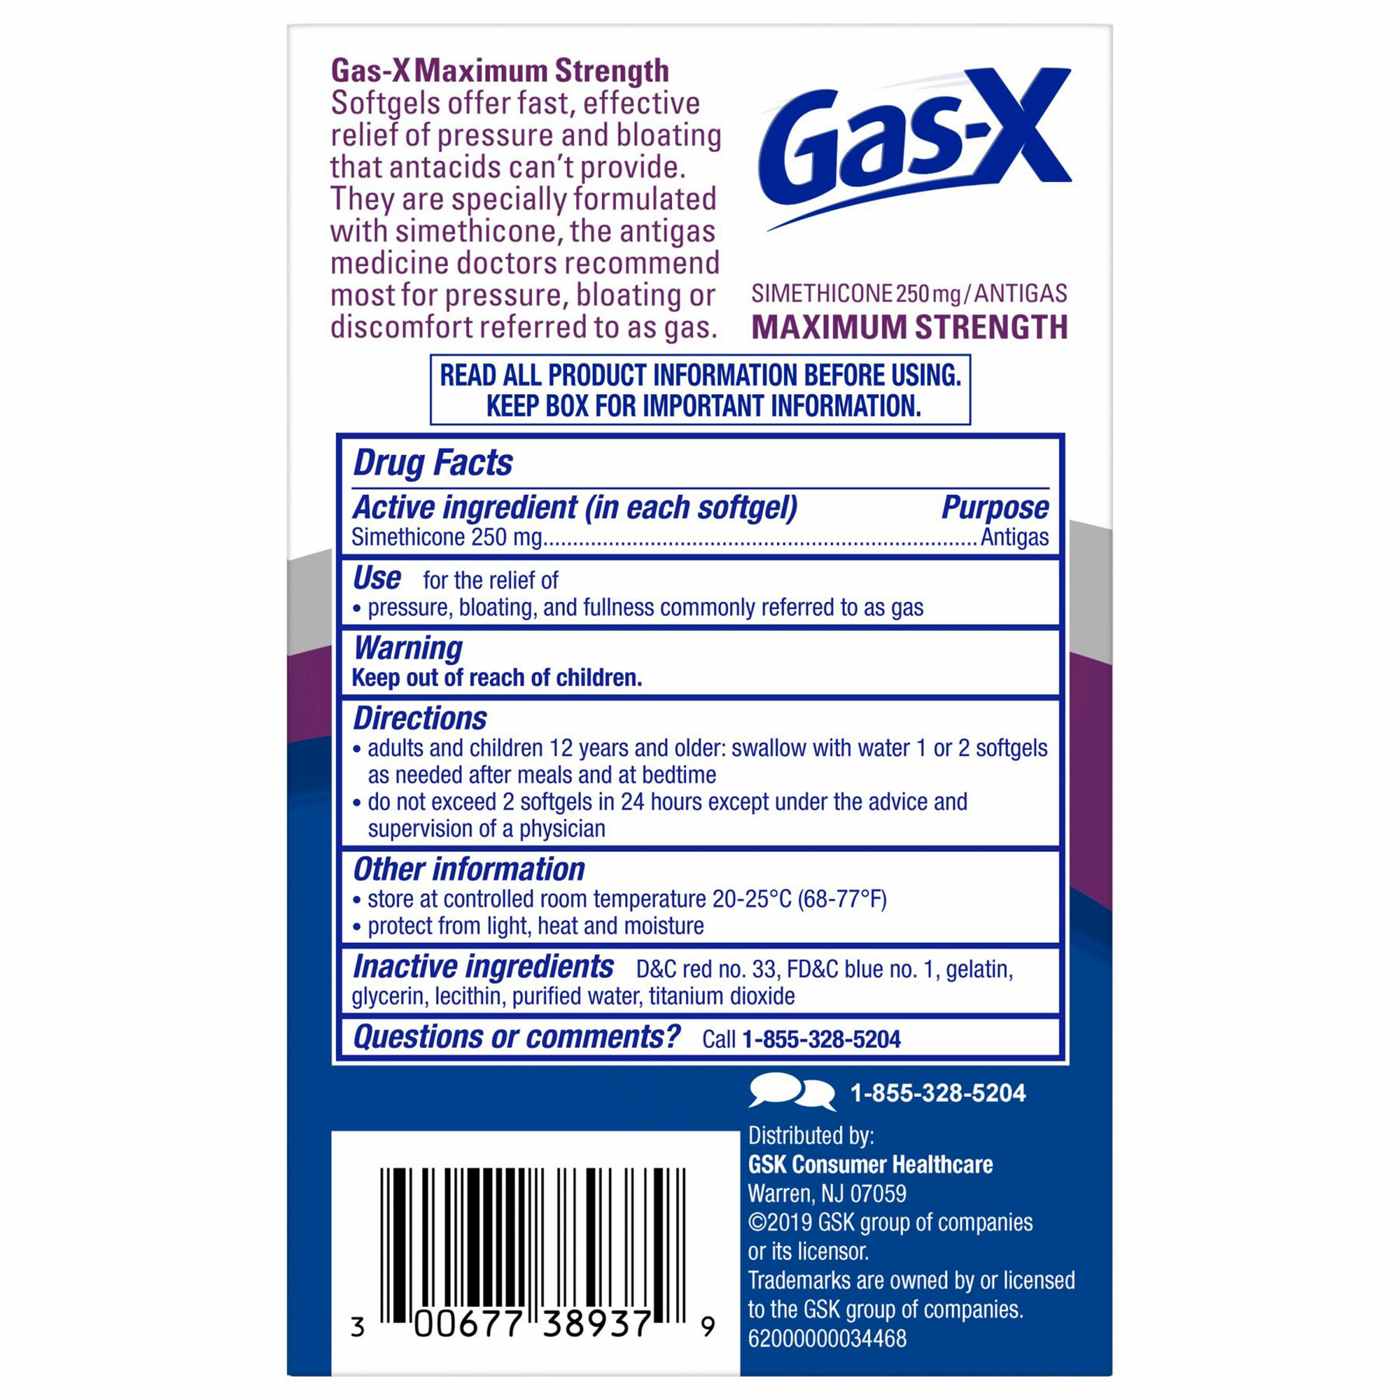 Gas-X Maximum Strength Antigas Softgels; image 6 of 8